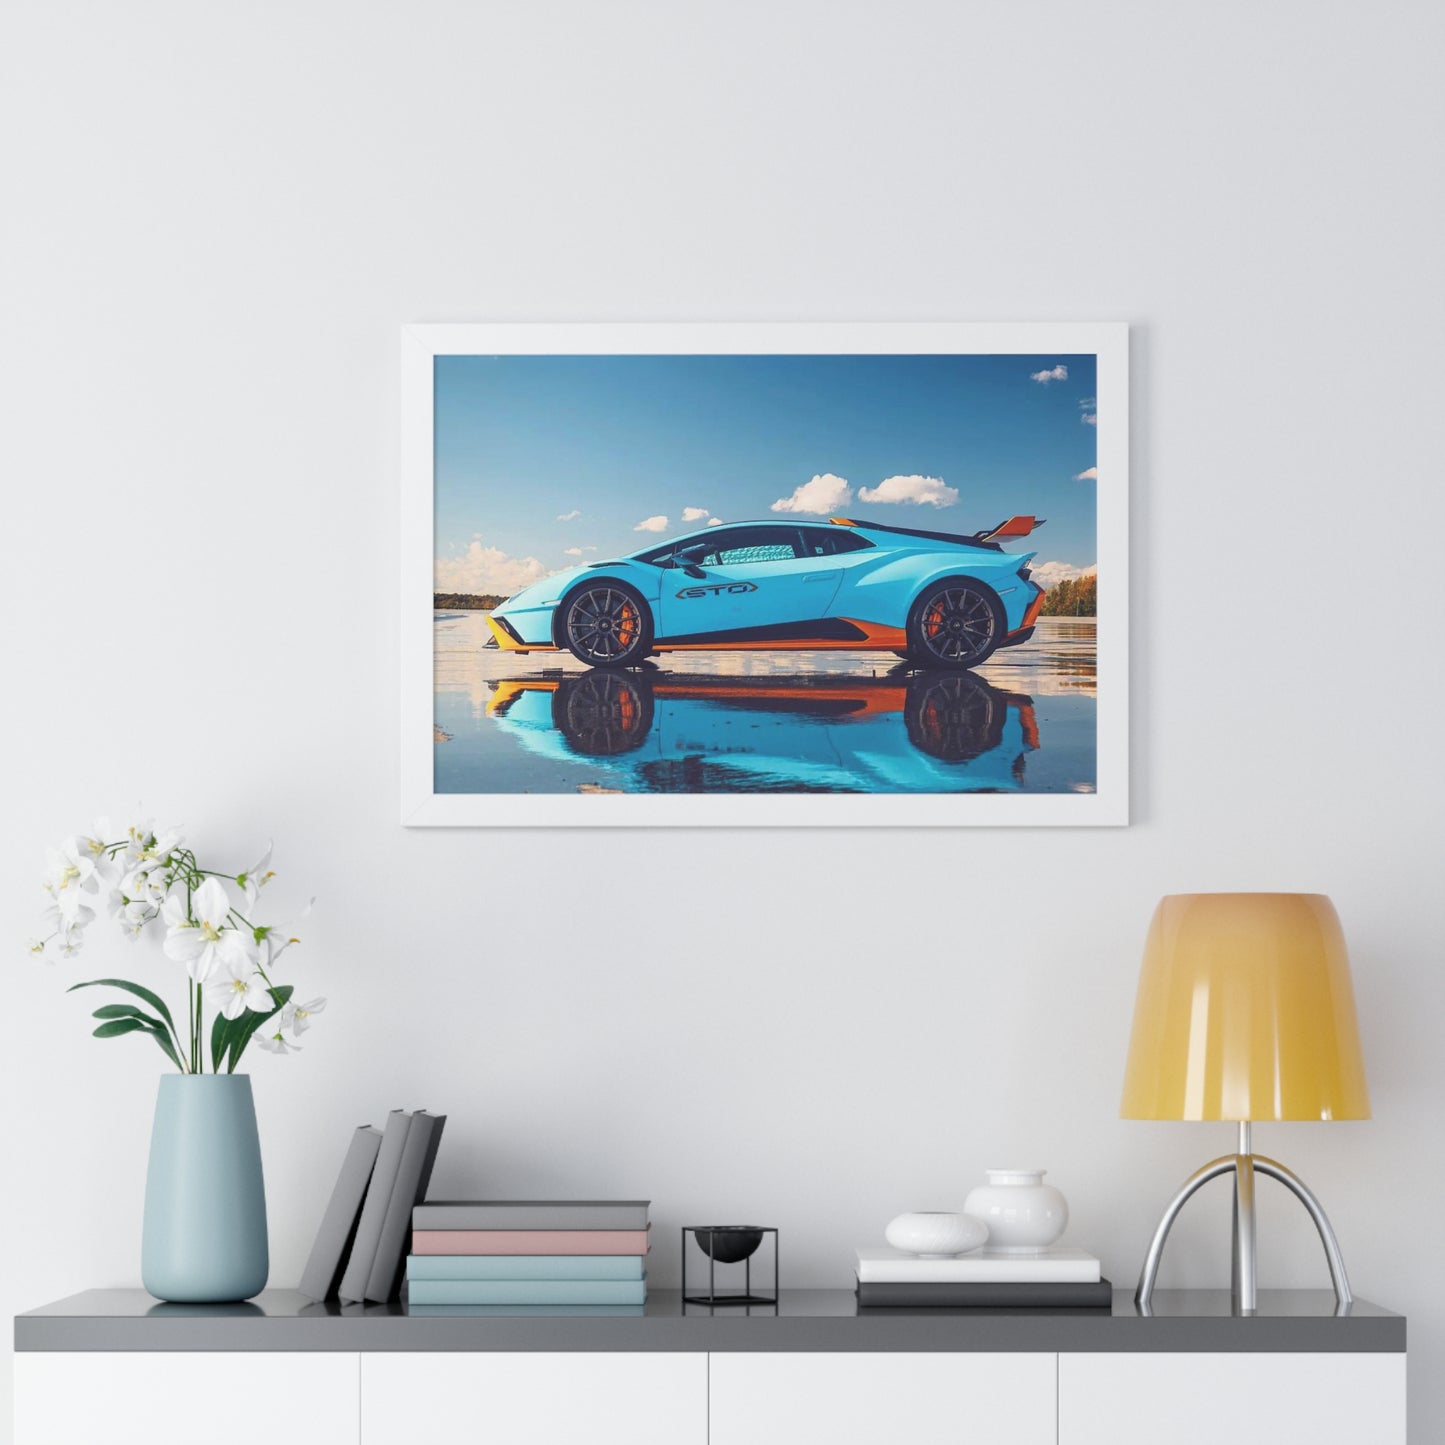 "Reflection" 30" x 20" Framed Lamborghini Poster